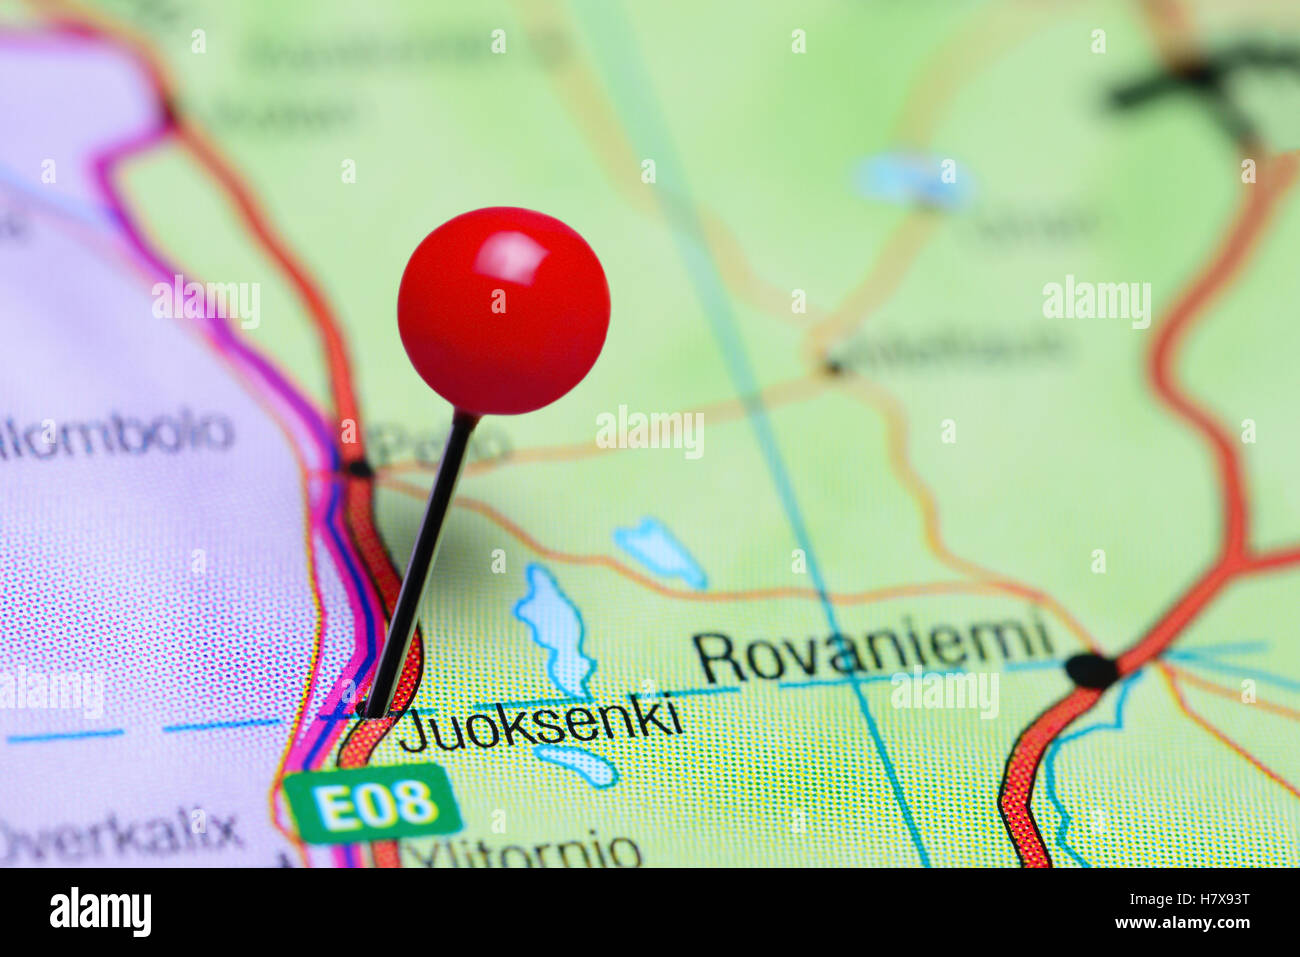 Juoksenki pinned on a map of Finland Stock Photo